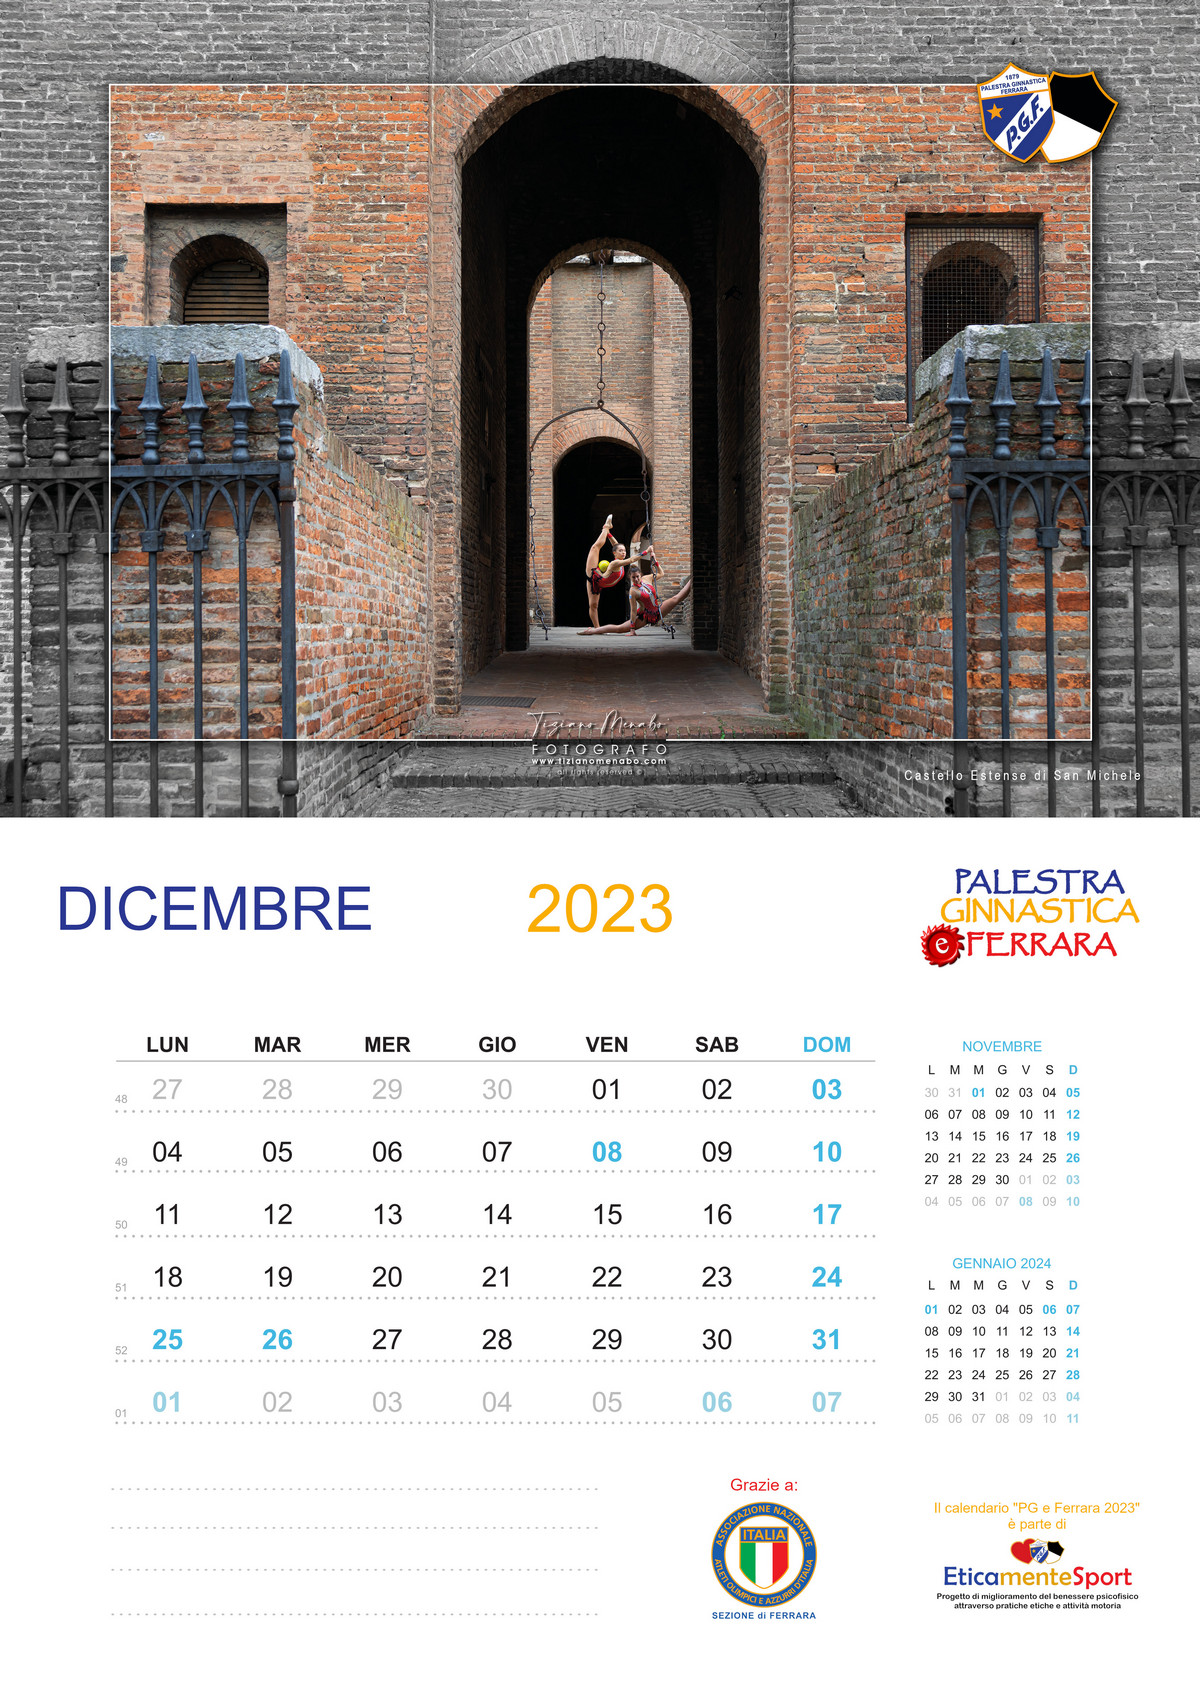 Calendario PG e Ferrara 2023-Palestra Ginnastica Ferrara a.s.d.